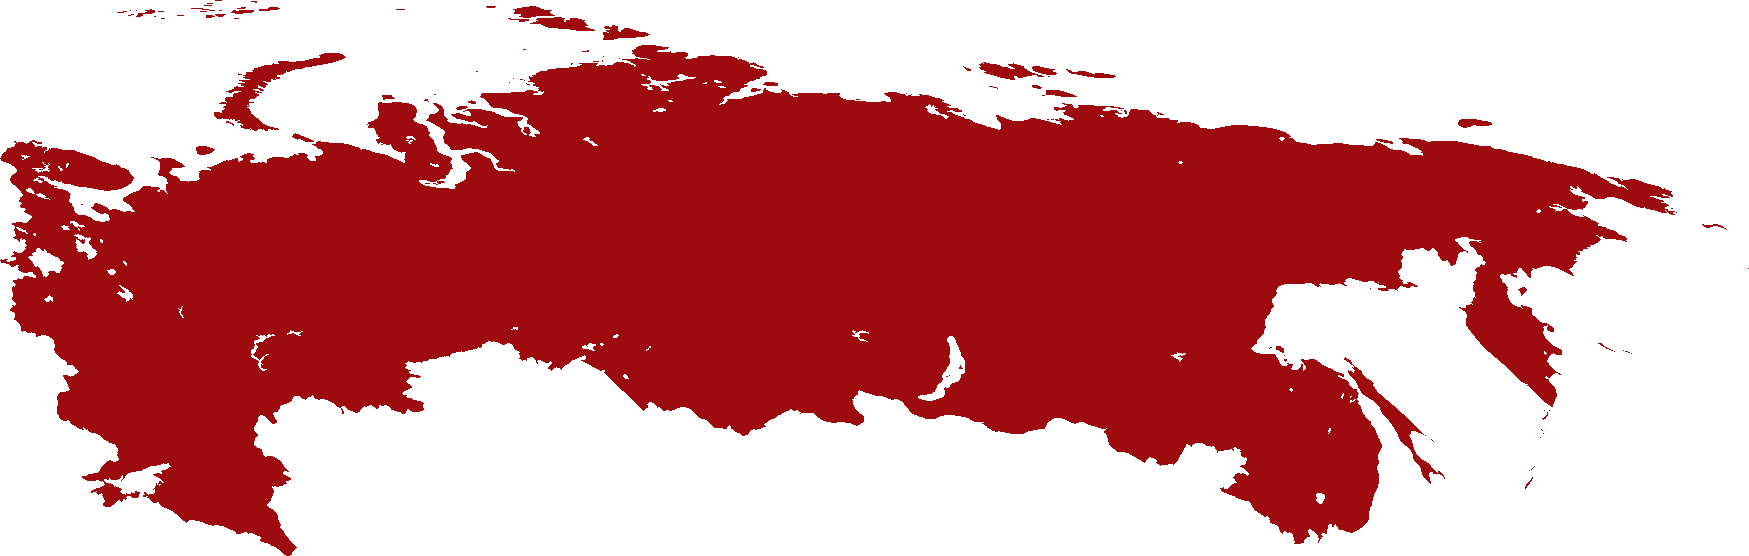 Outline of Central Ruska